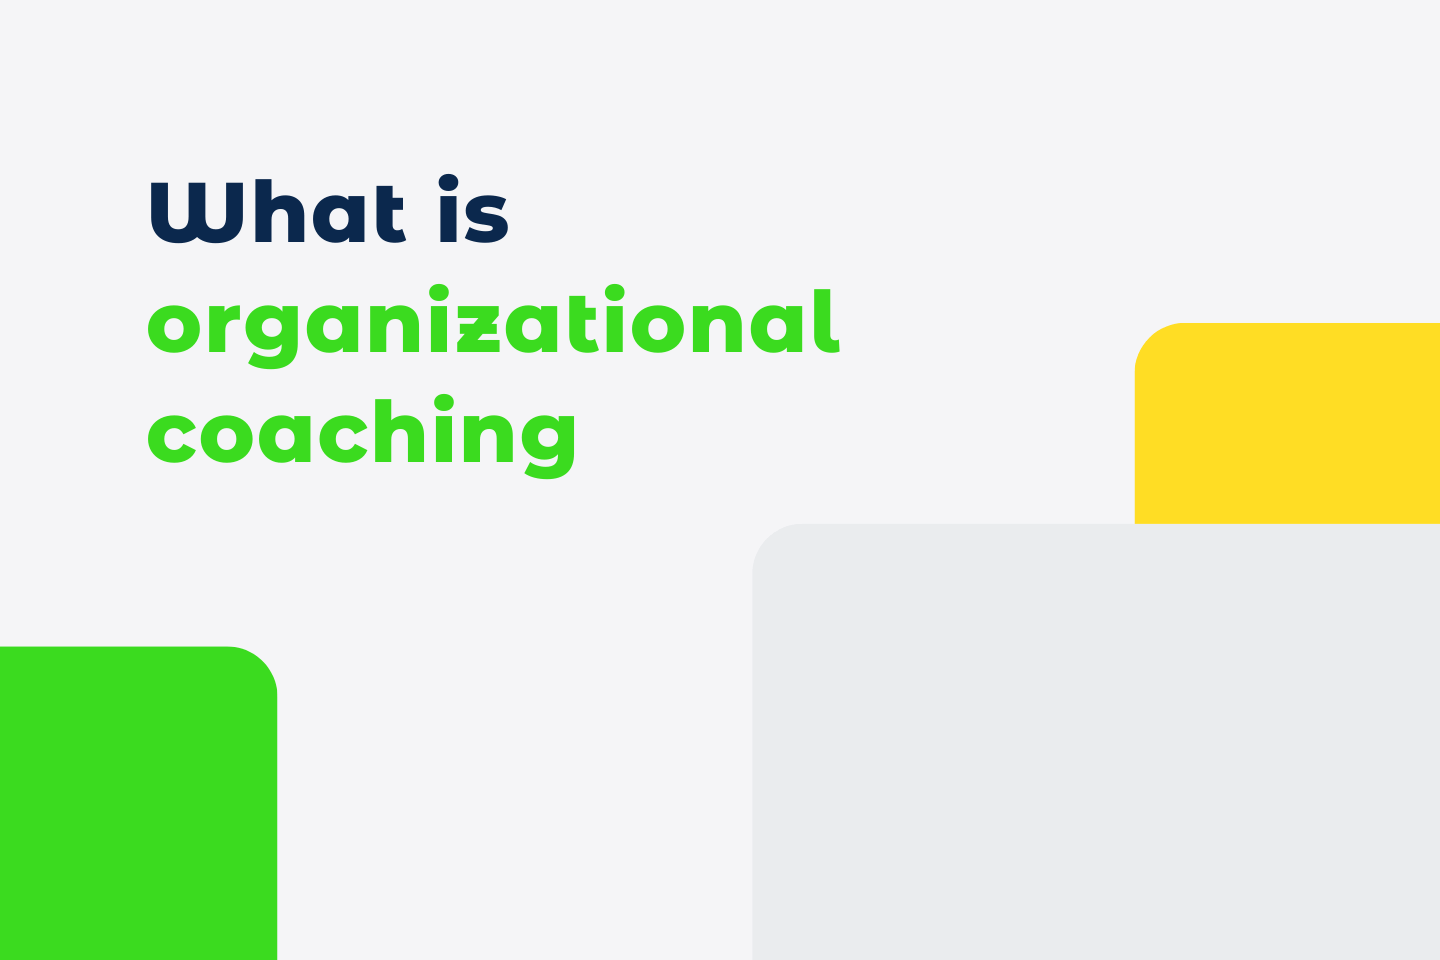 What is organizational coaching